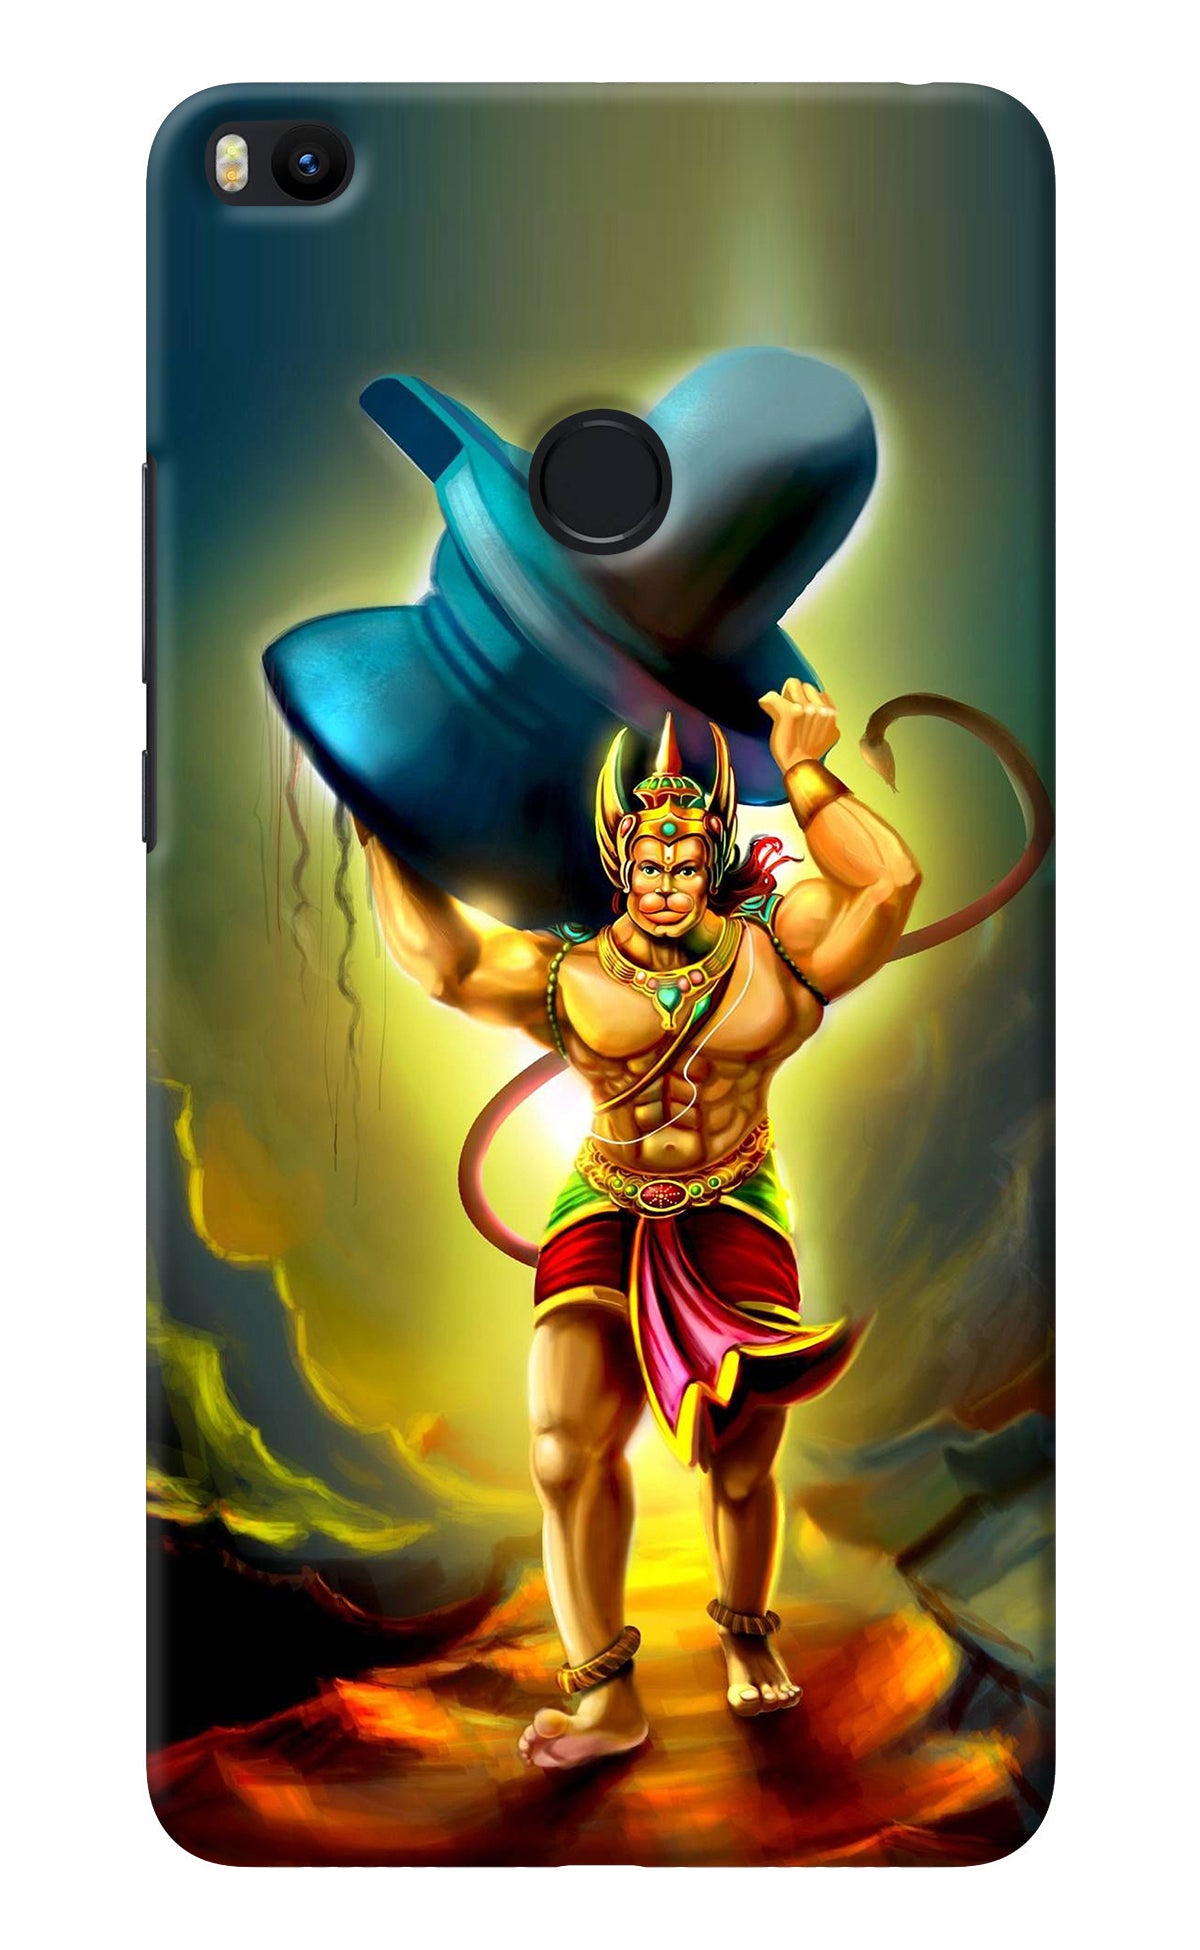 Lord Hanuman Mi Max 2 Back Cover